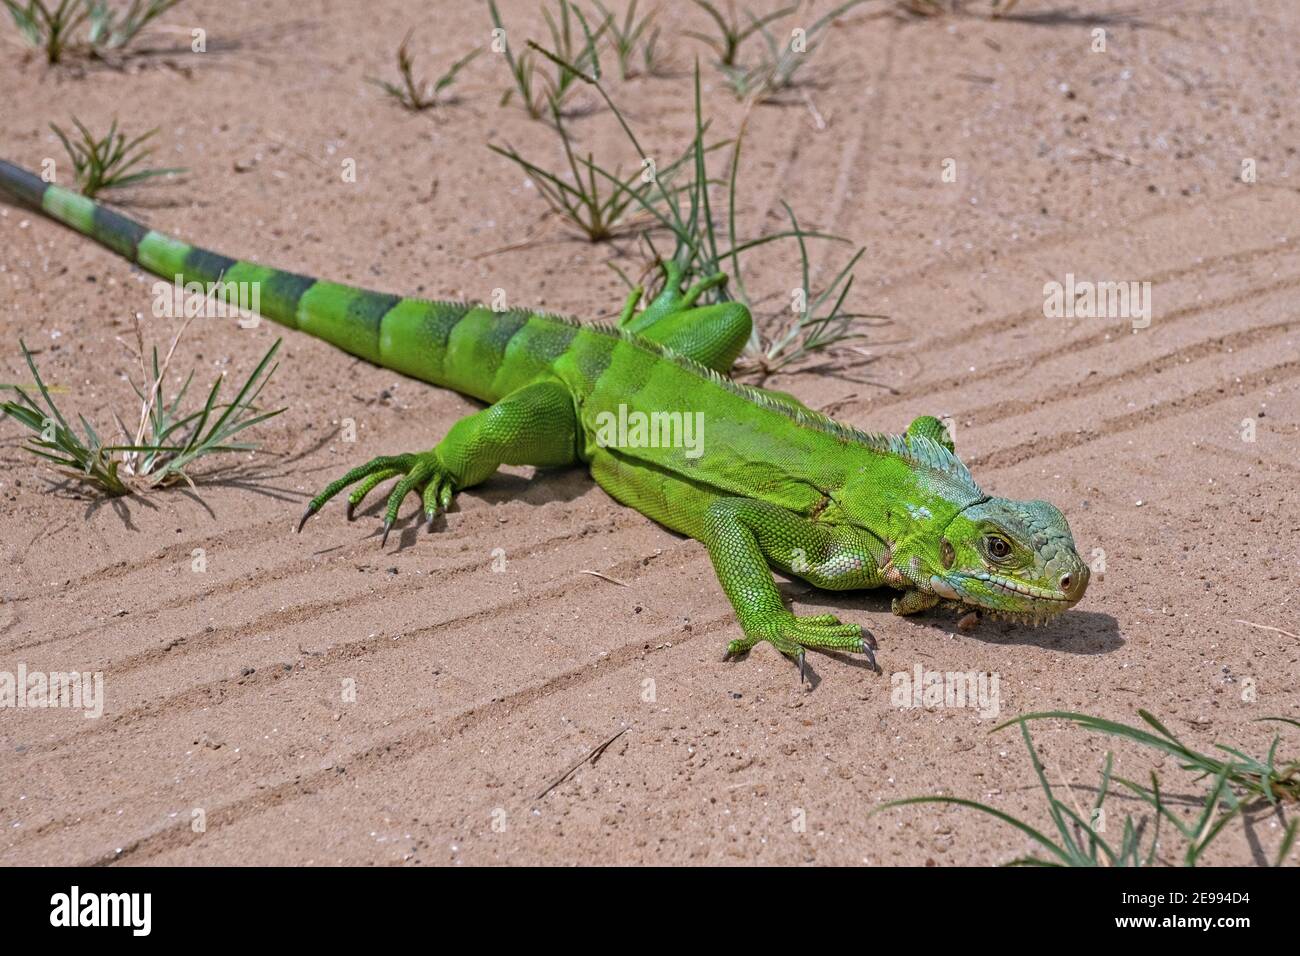 Novellame verde iguana / iguana americana (Iguana iguana) attraversamento del battistrada del pneumatico in sabbia di strada sterrata / dirtrad Foto Stock